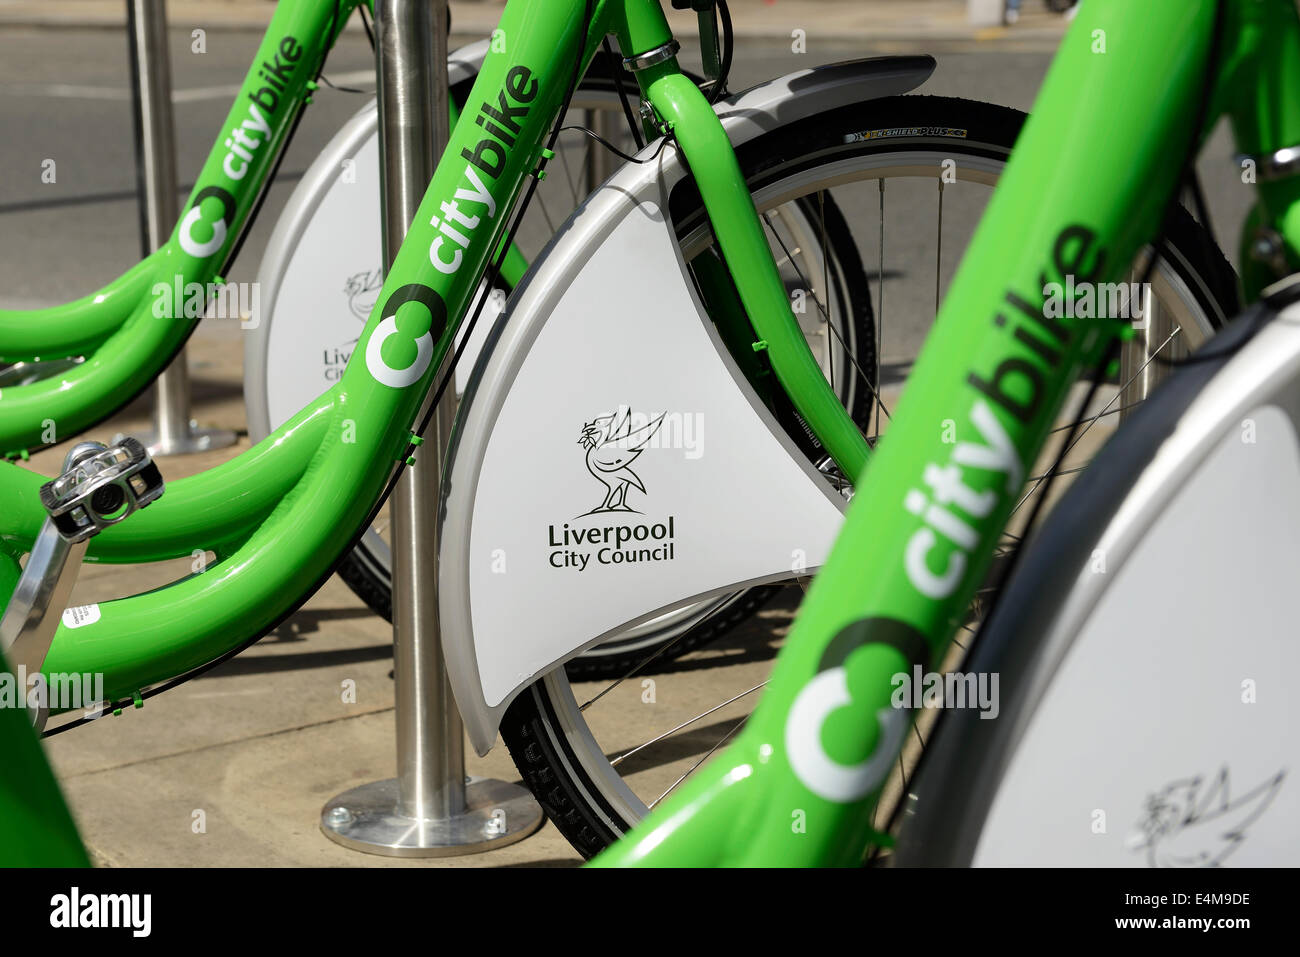 Grüne Fahrräder aus dem Liverpool CIty Council City Bike Programm Stockfoto